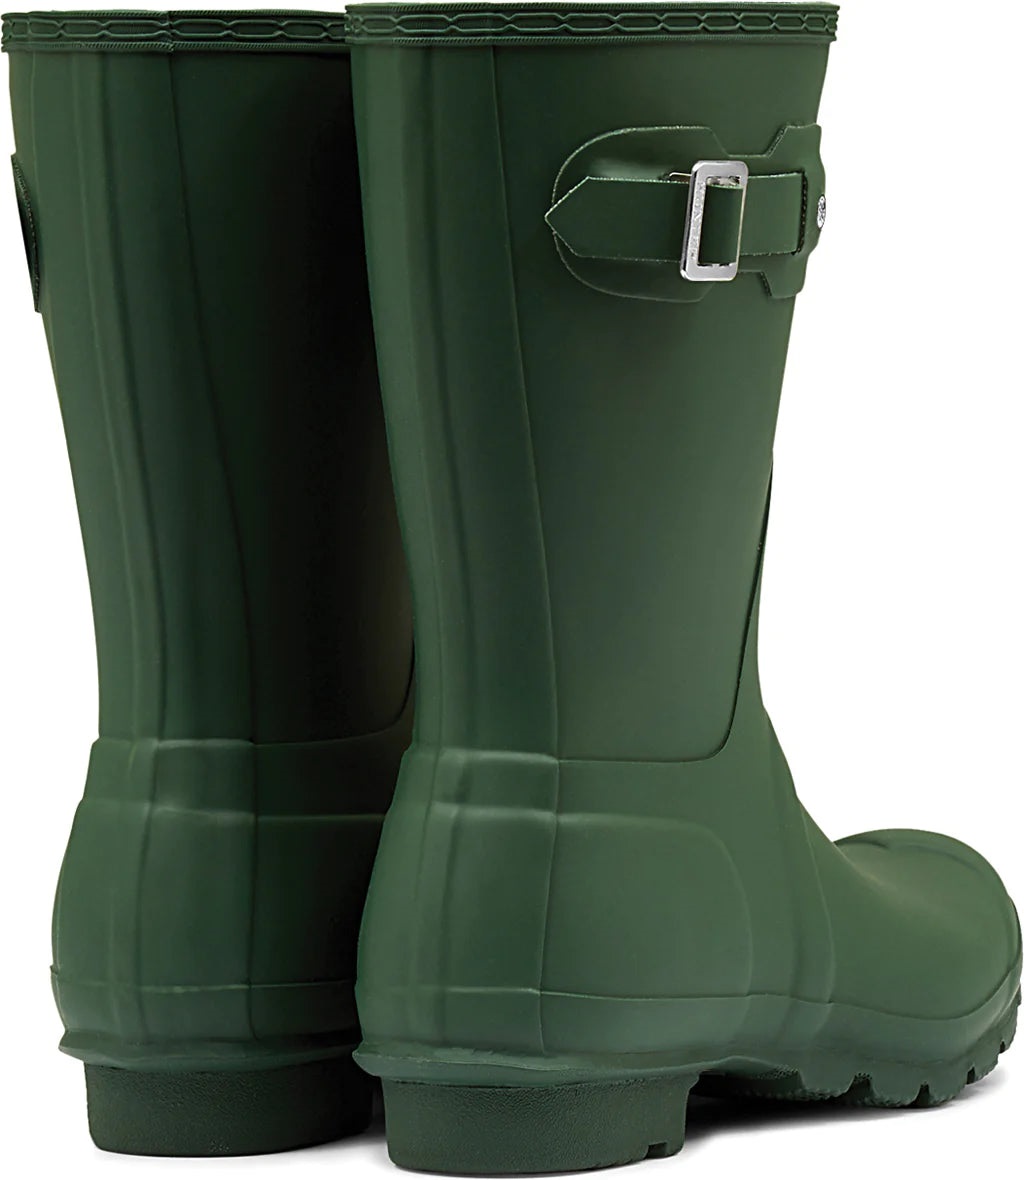 HUNTER Original Short Rain Boots - Green (US 9)